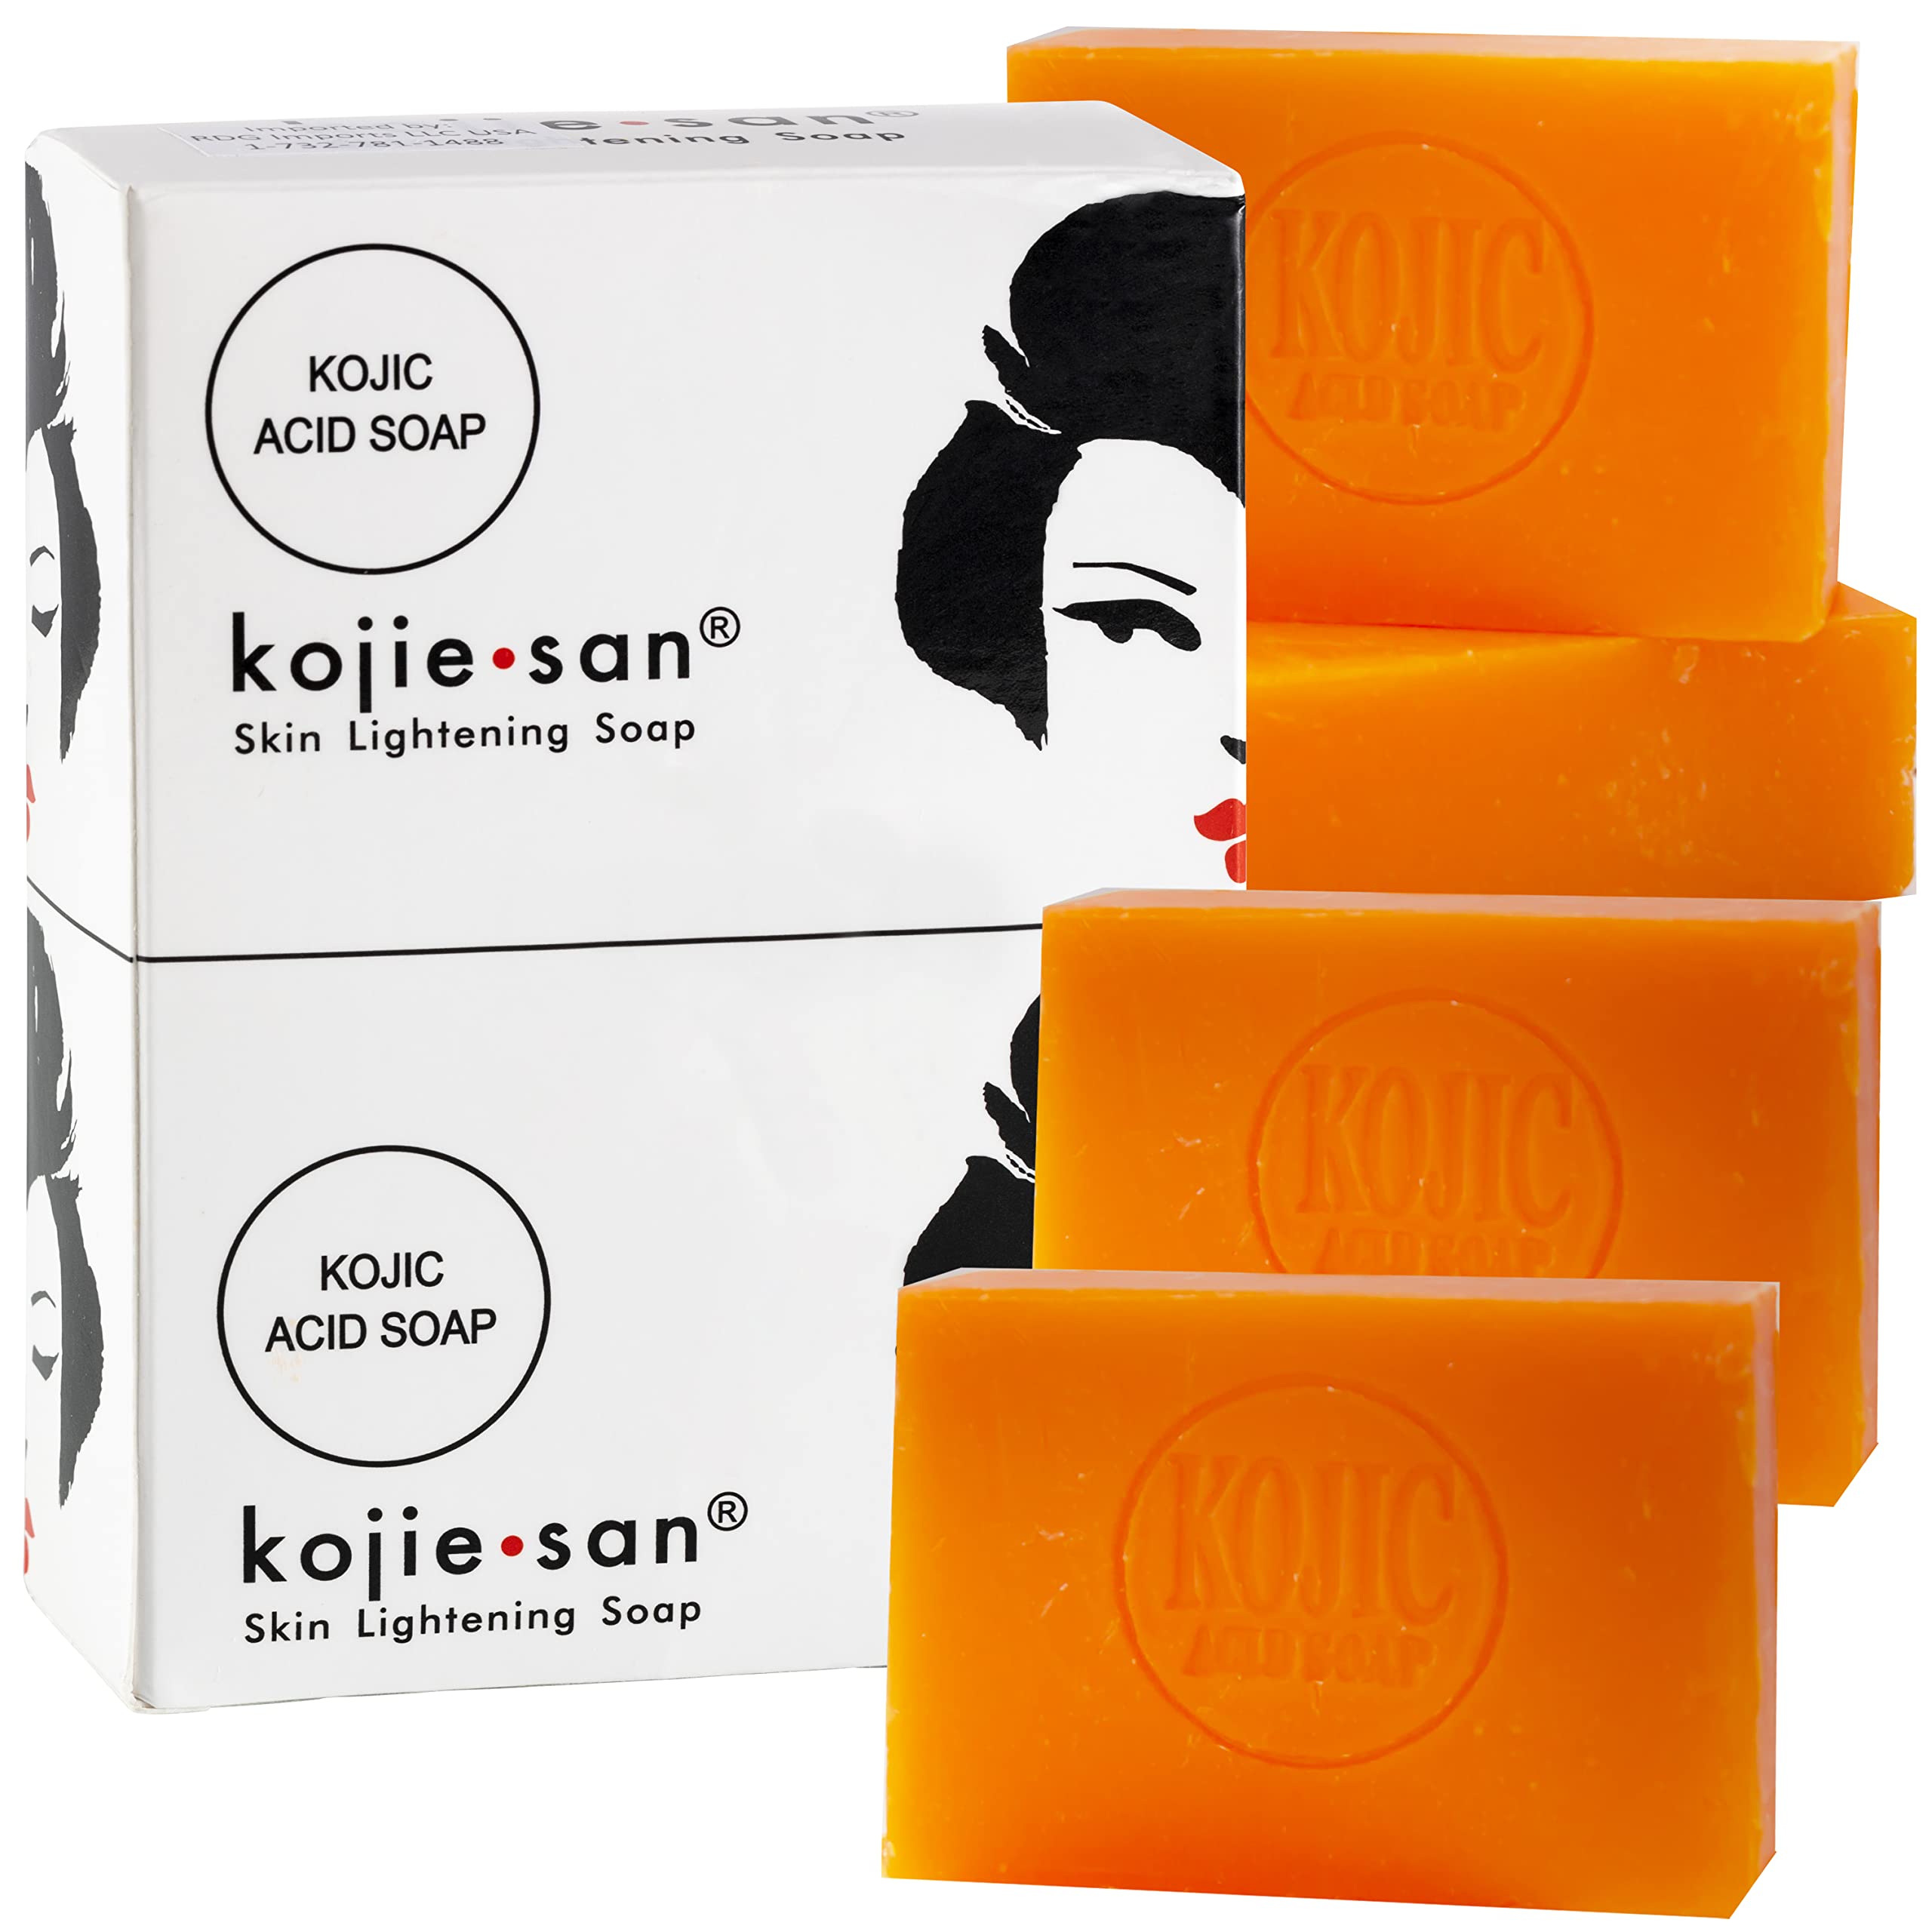 Kojie San Skin Brightening Soap - Original Kojic Acid Soap for